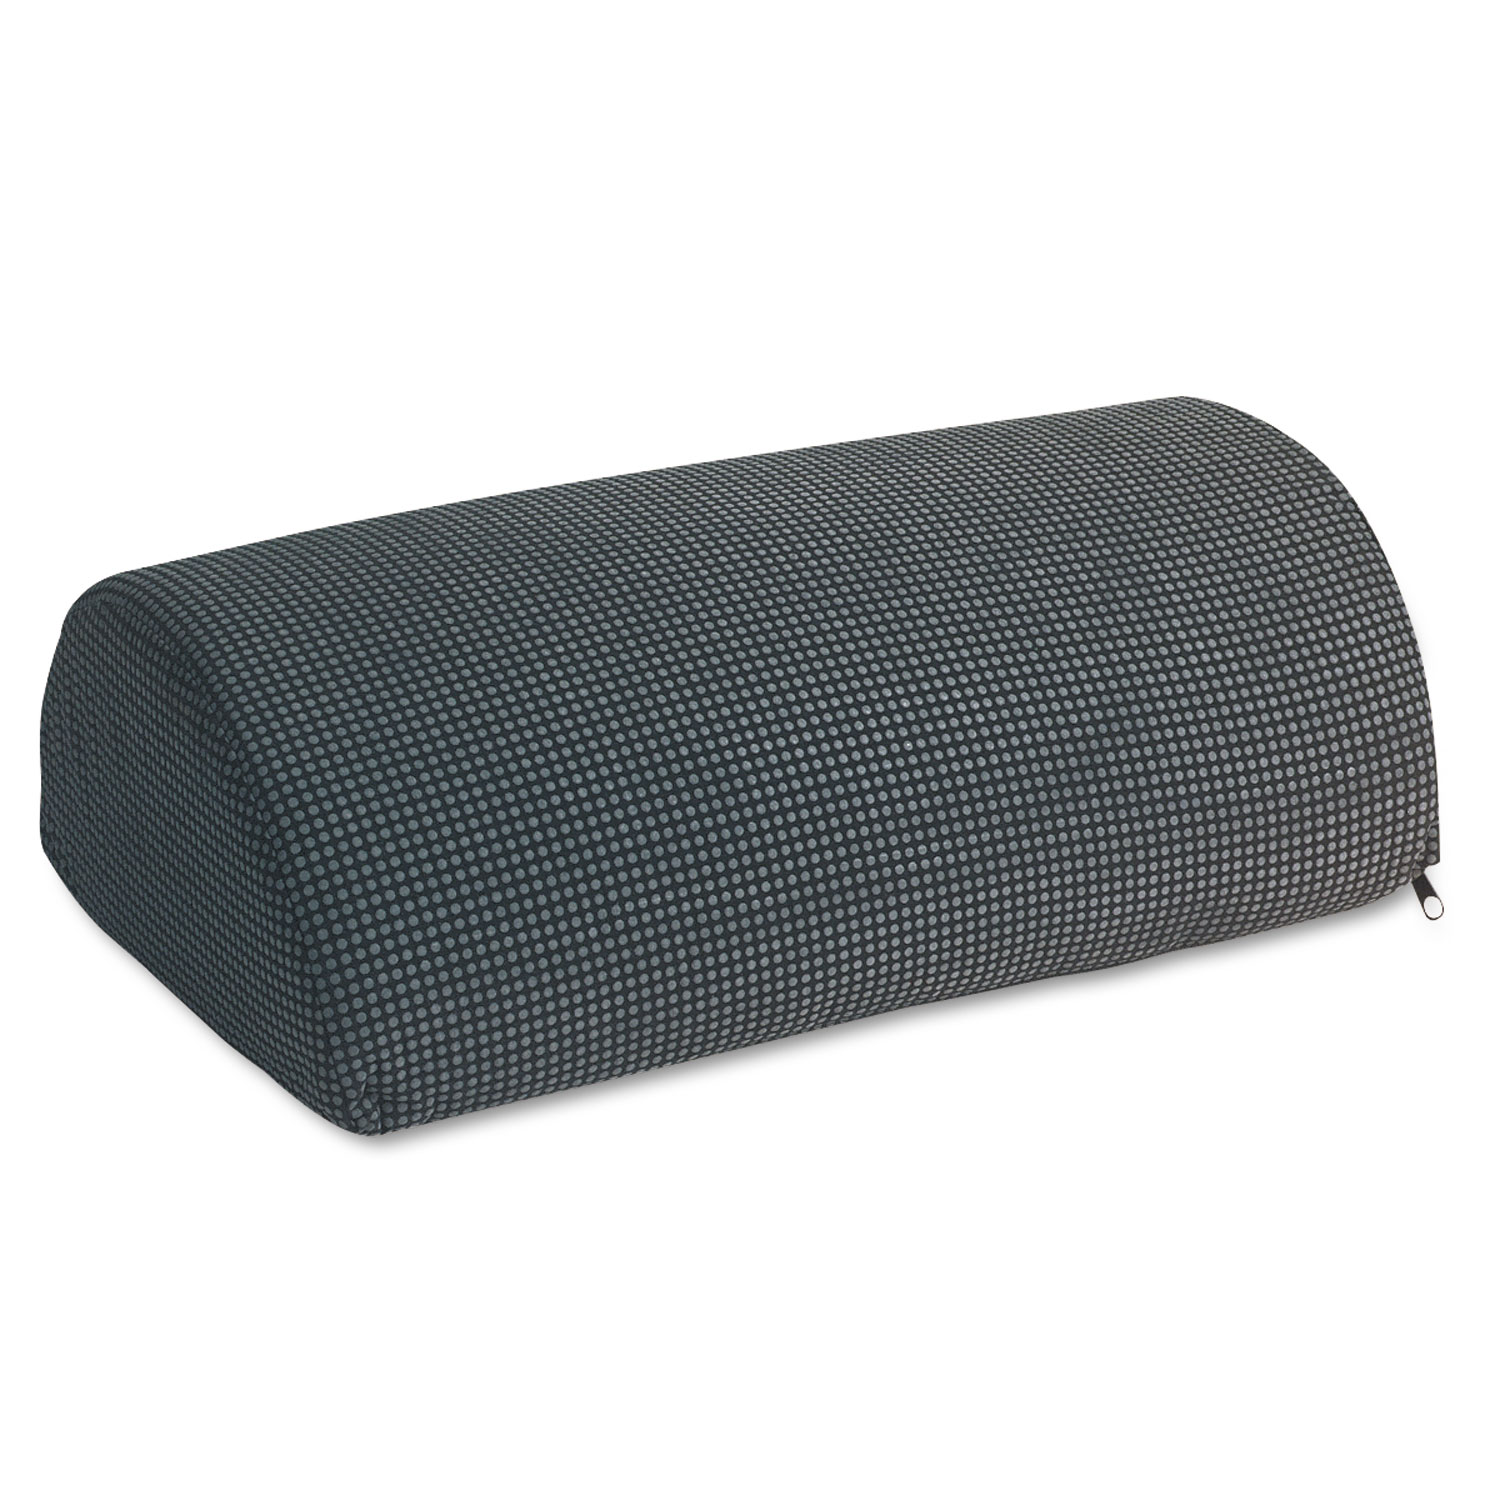  Safco 92311 Half-Cylinder Padded Foot Cushion, 17.5w x 11.5d x 6.25h, Black (SAF92311) 